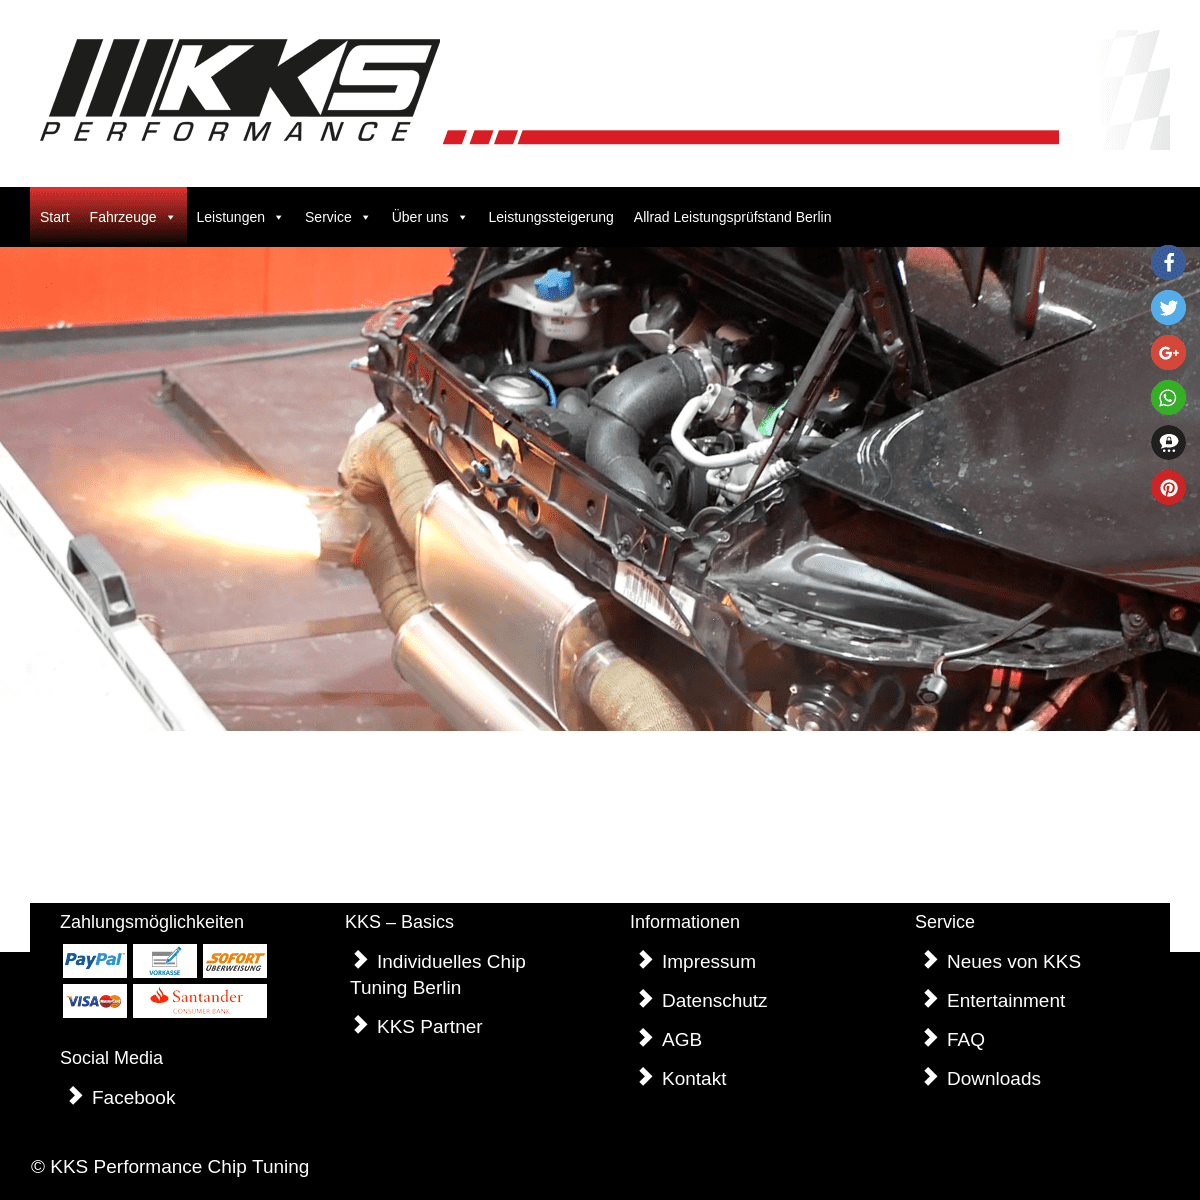 A complete backup of kks-performance.com